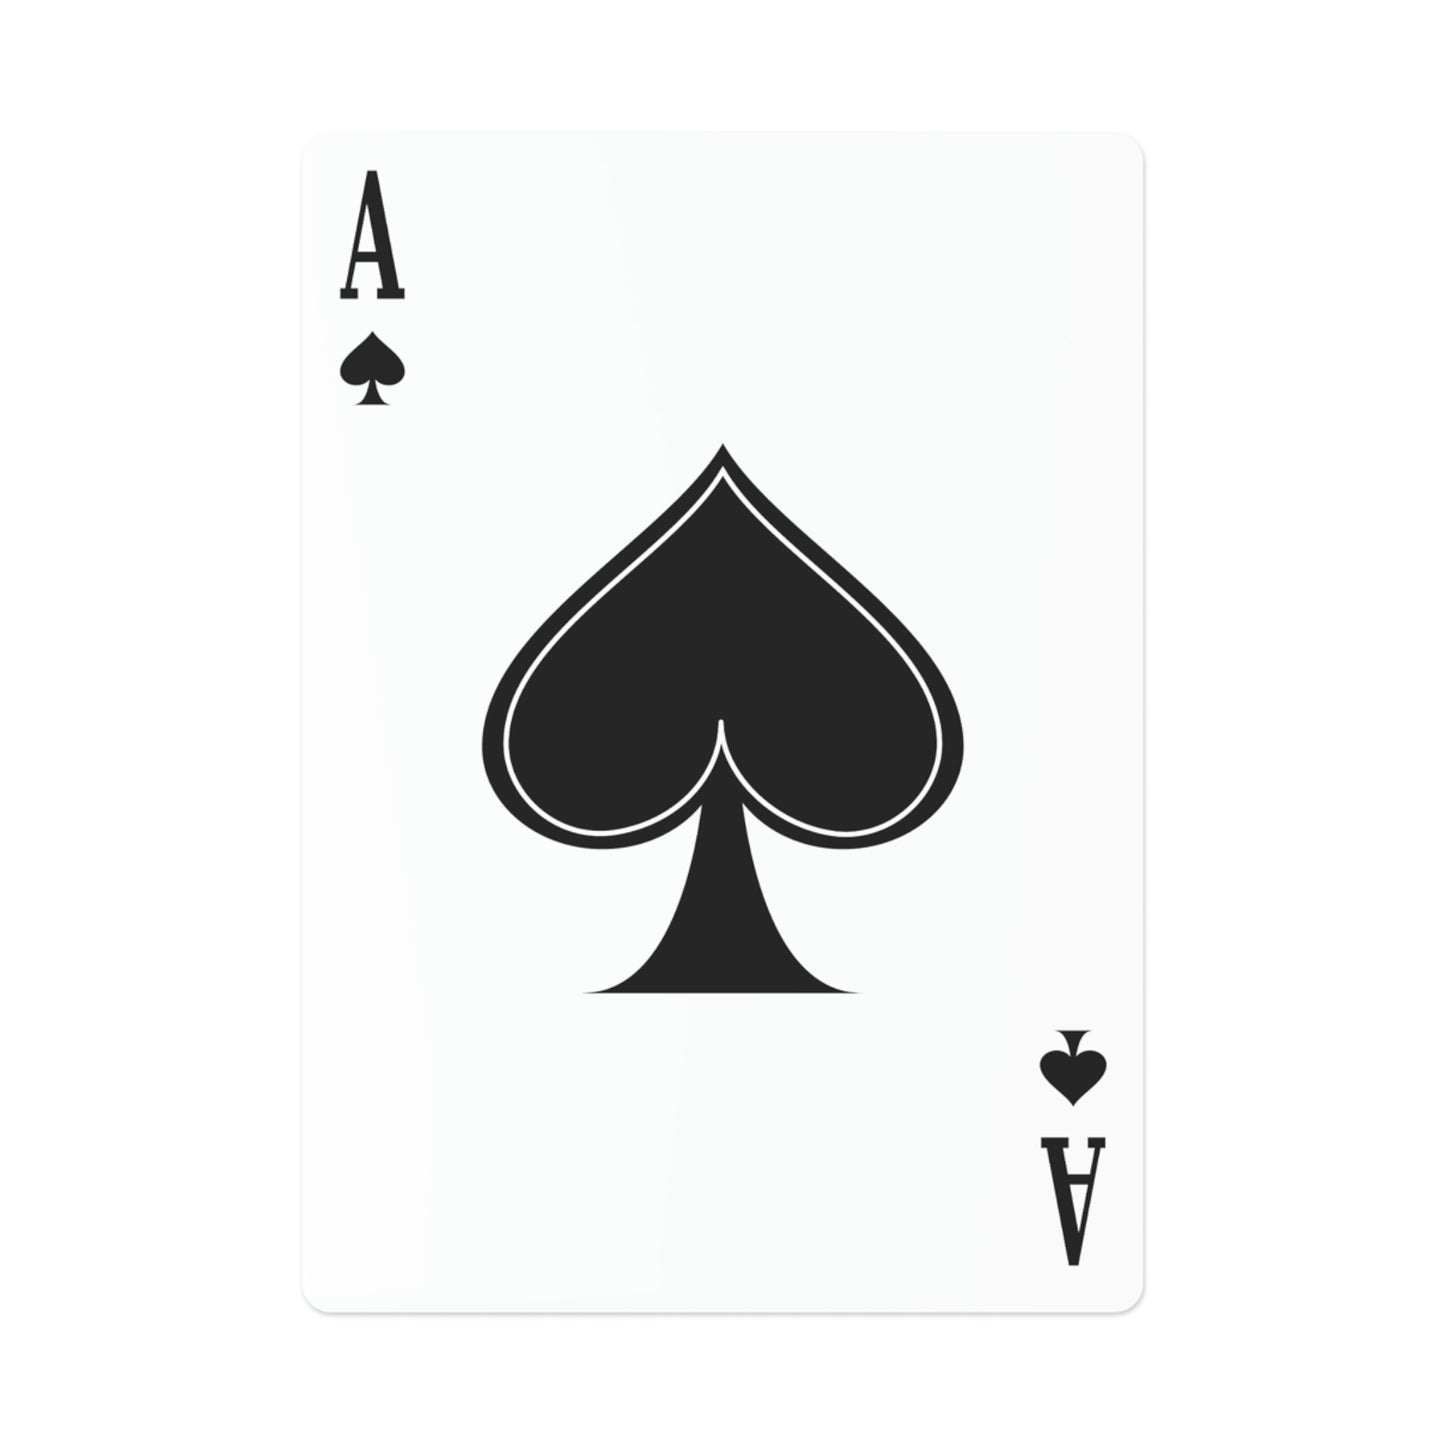 City Park Samoyed Poker Cards